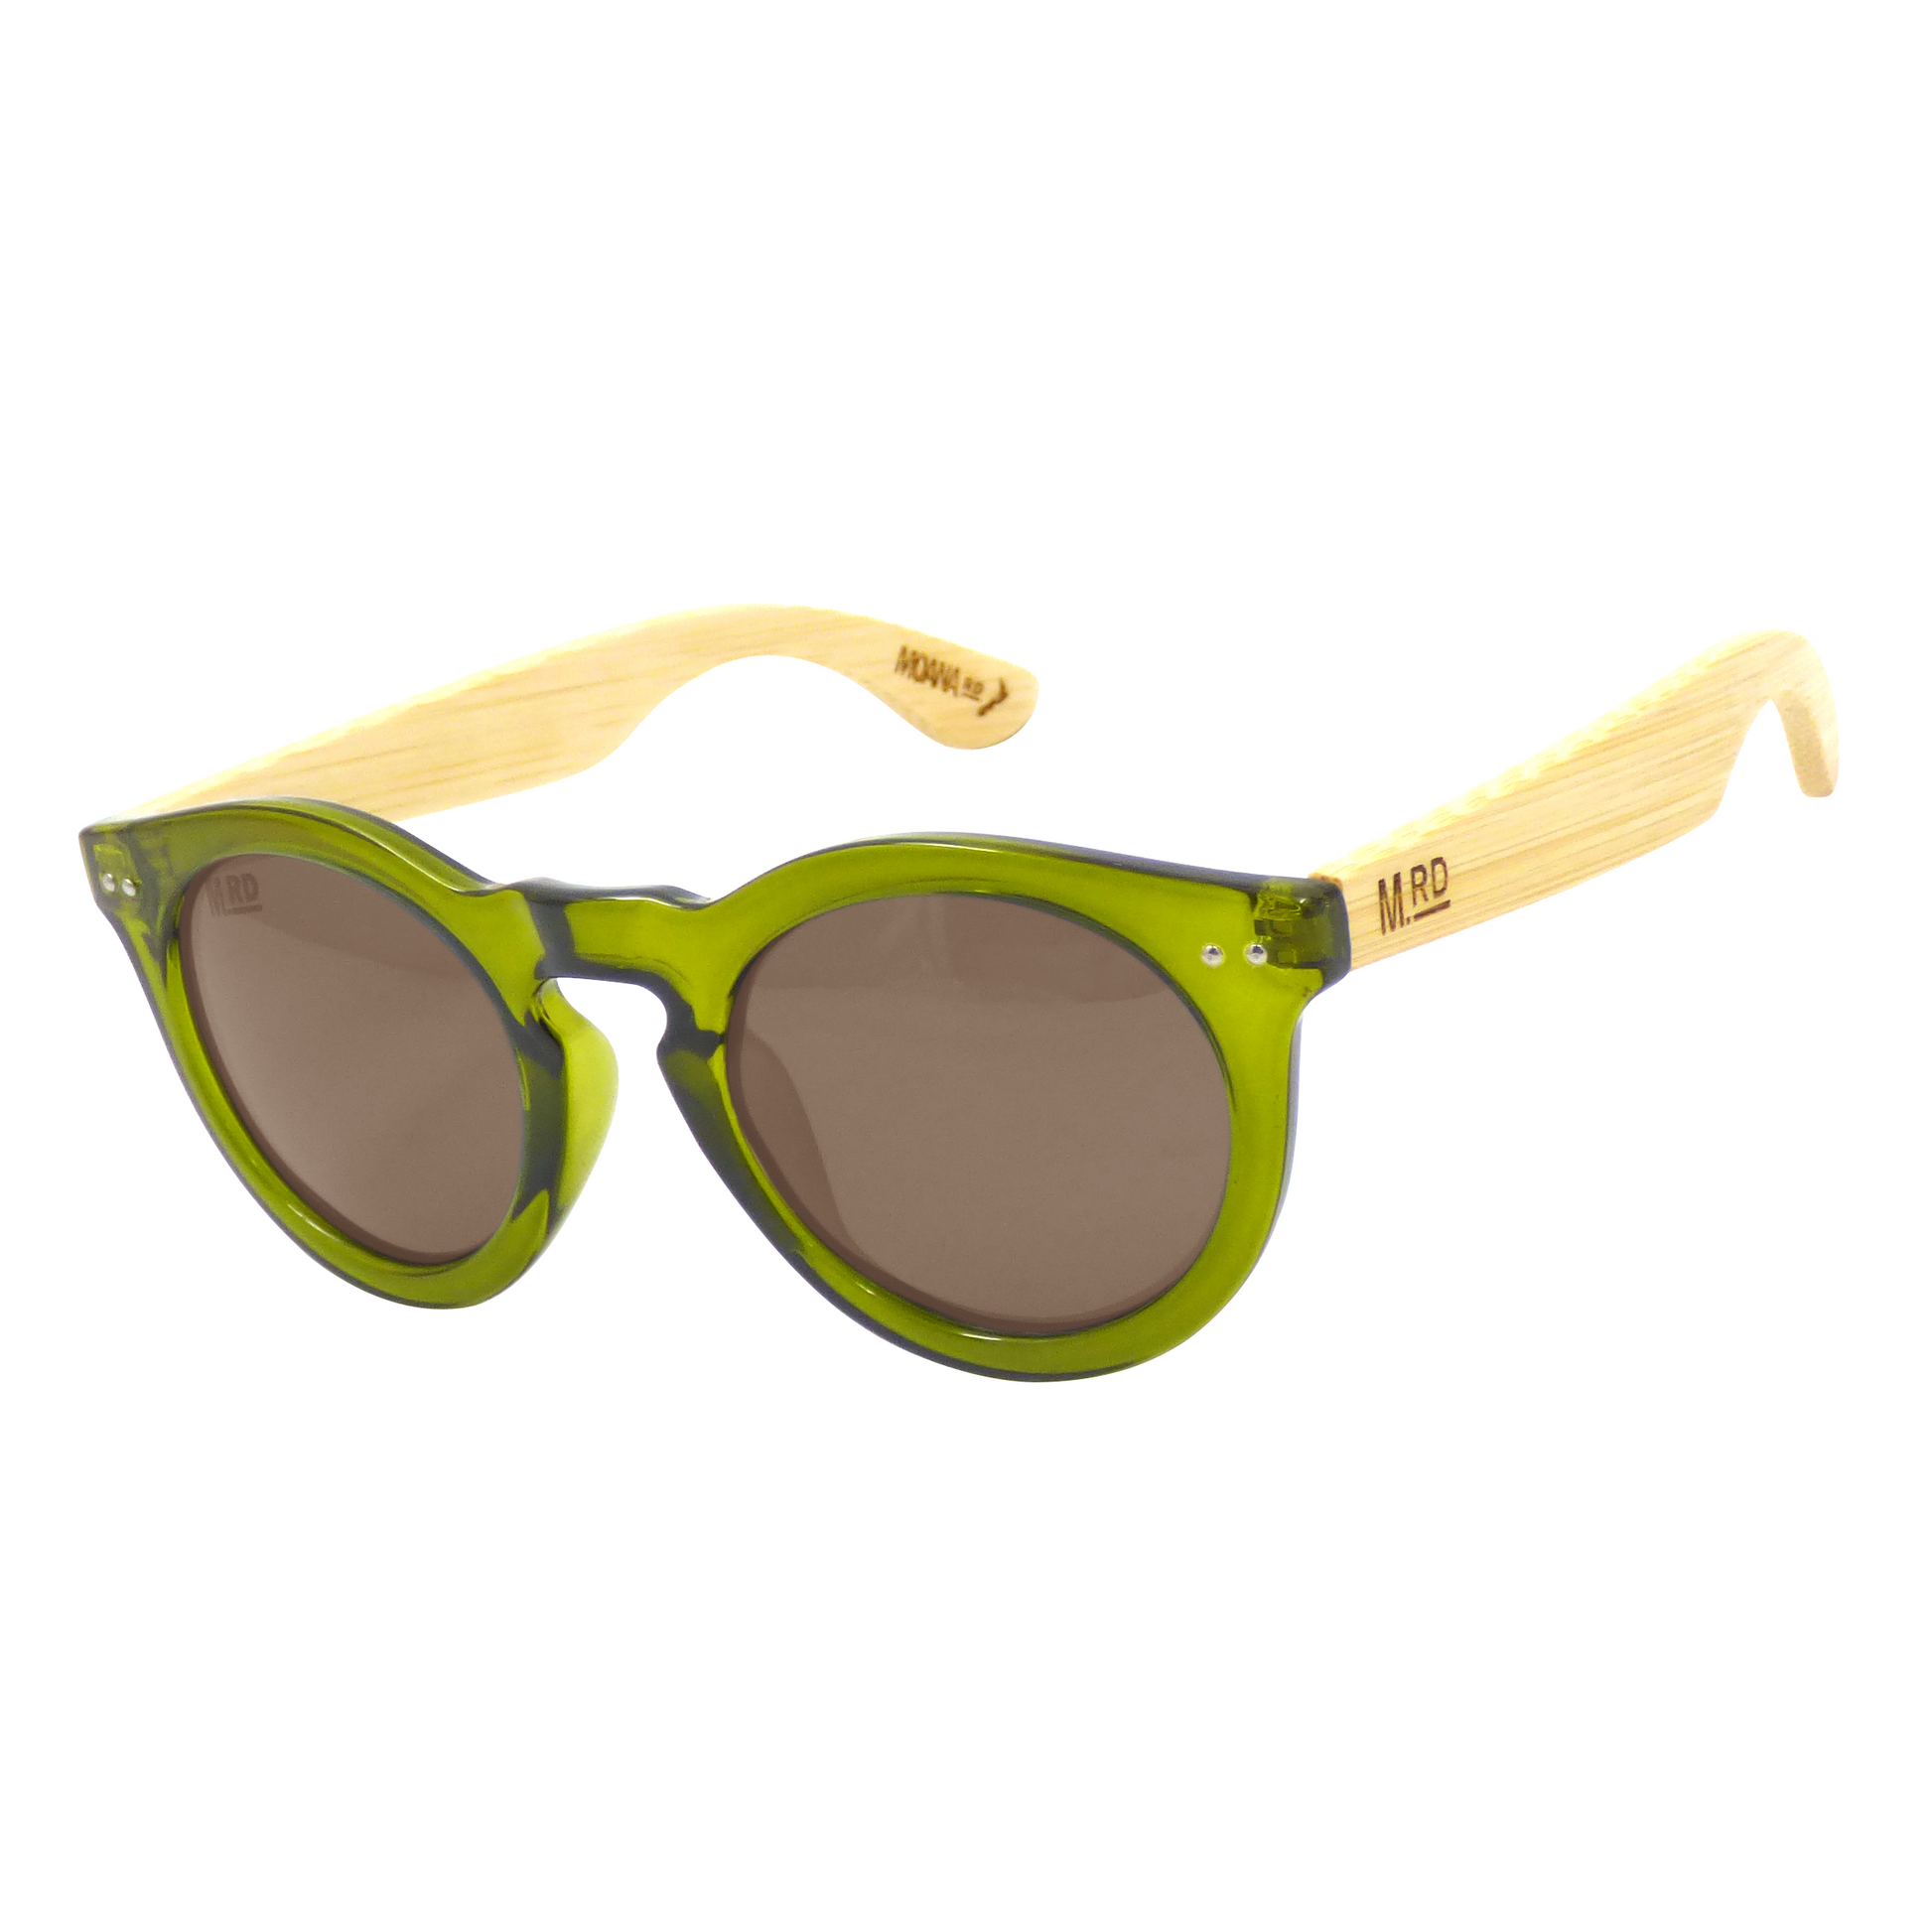 Grace Kelly Olive Green & Wood Sunglasses | Moana Road